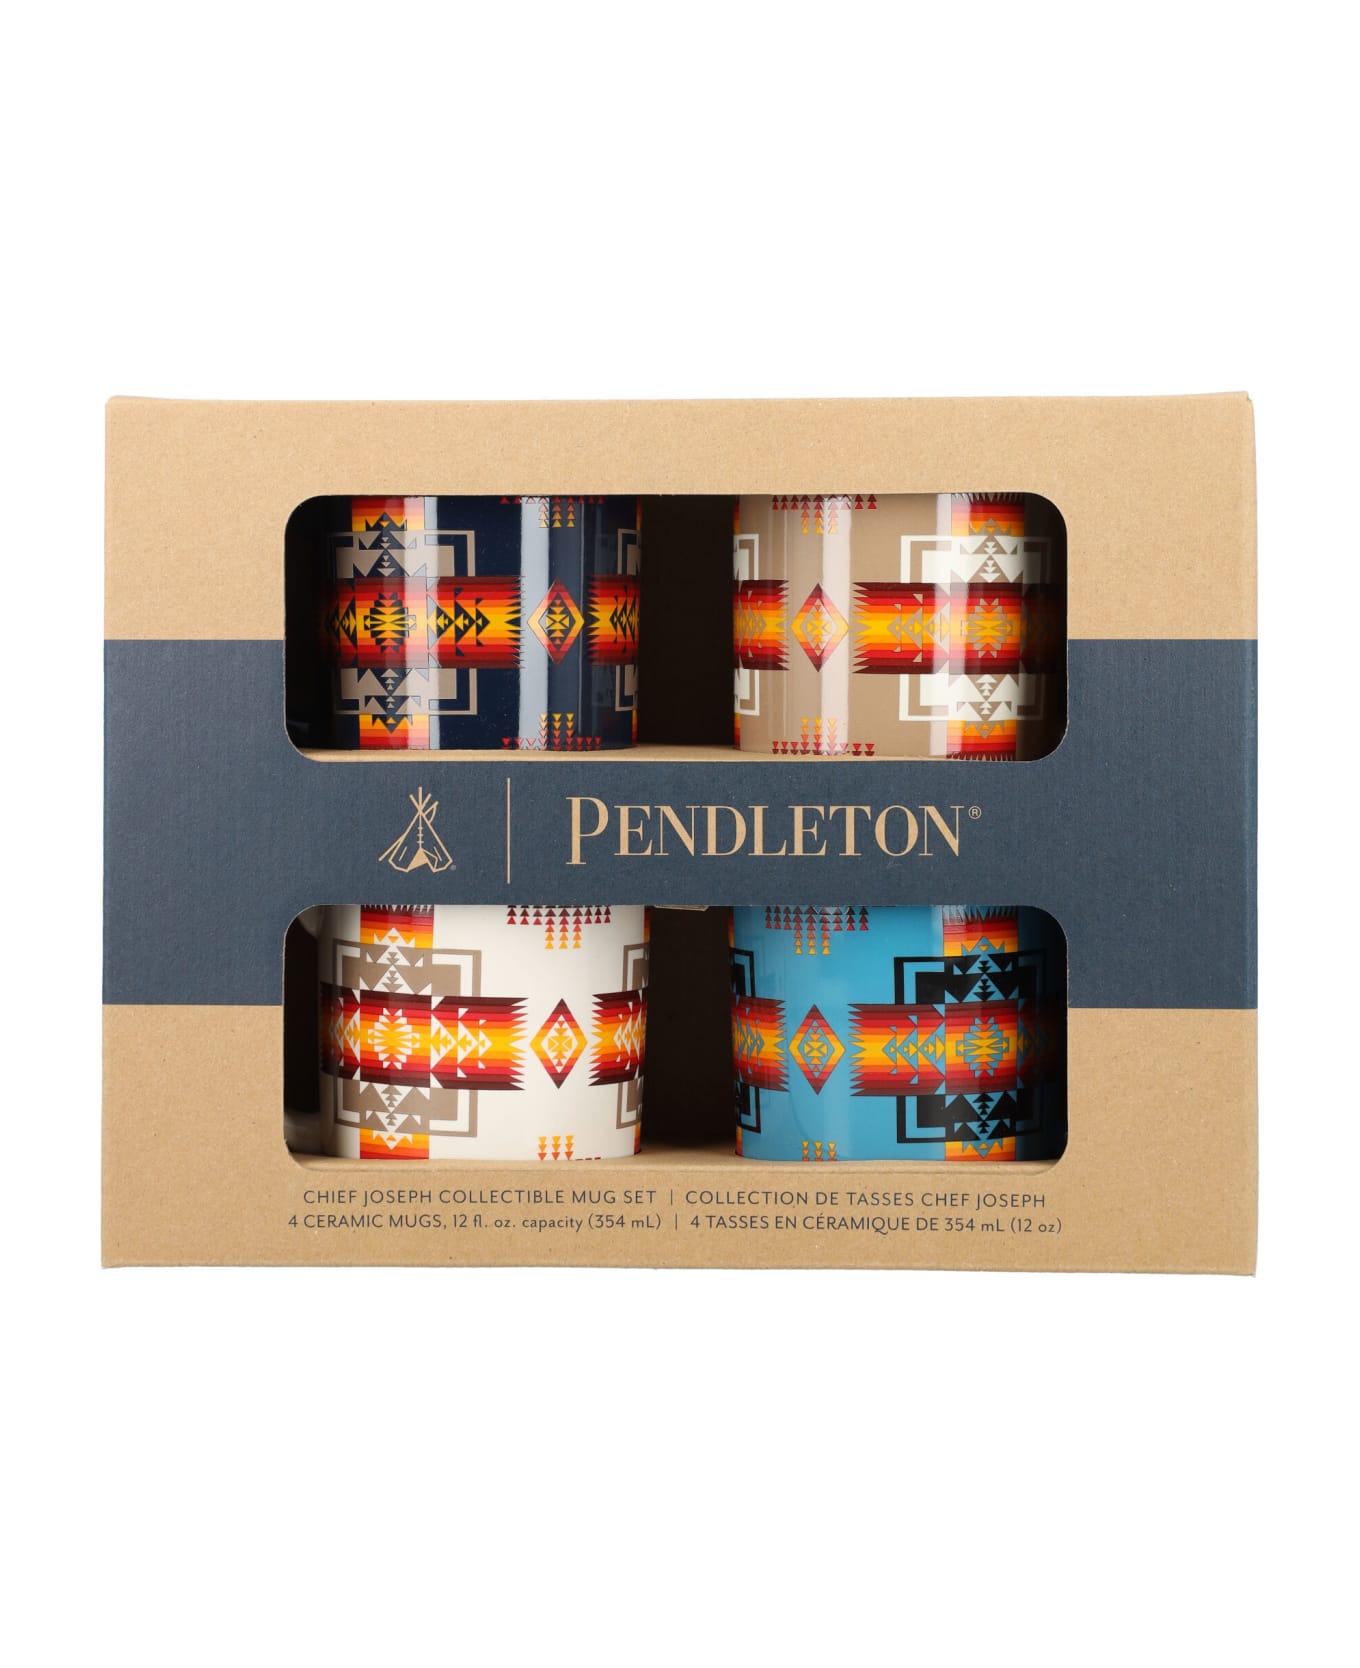 Pendleton 12oz Ceramig Mug Set Of 4 - Only 1 left